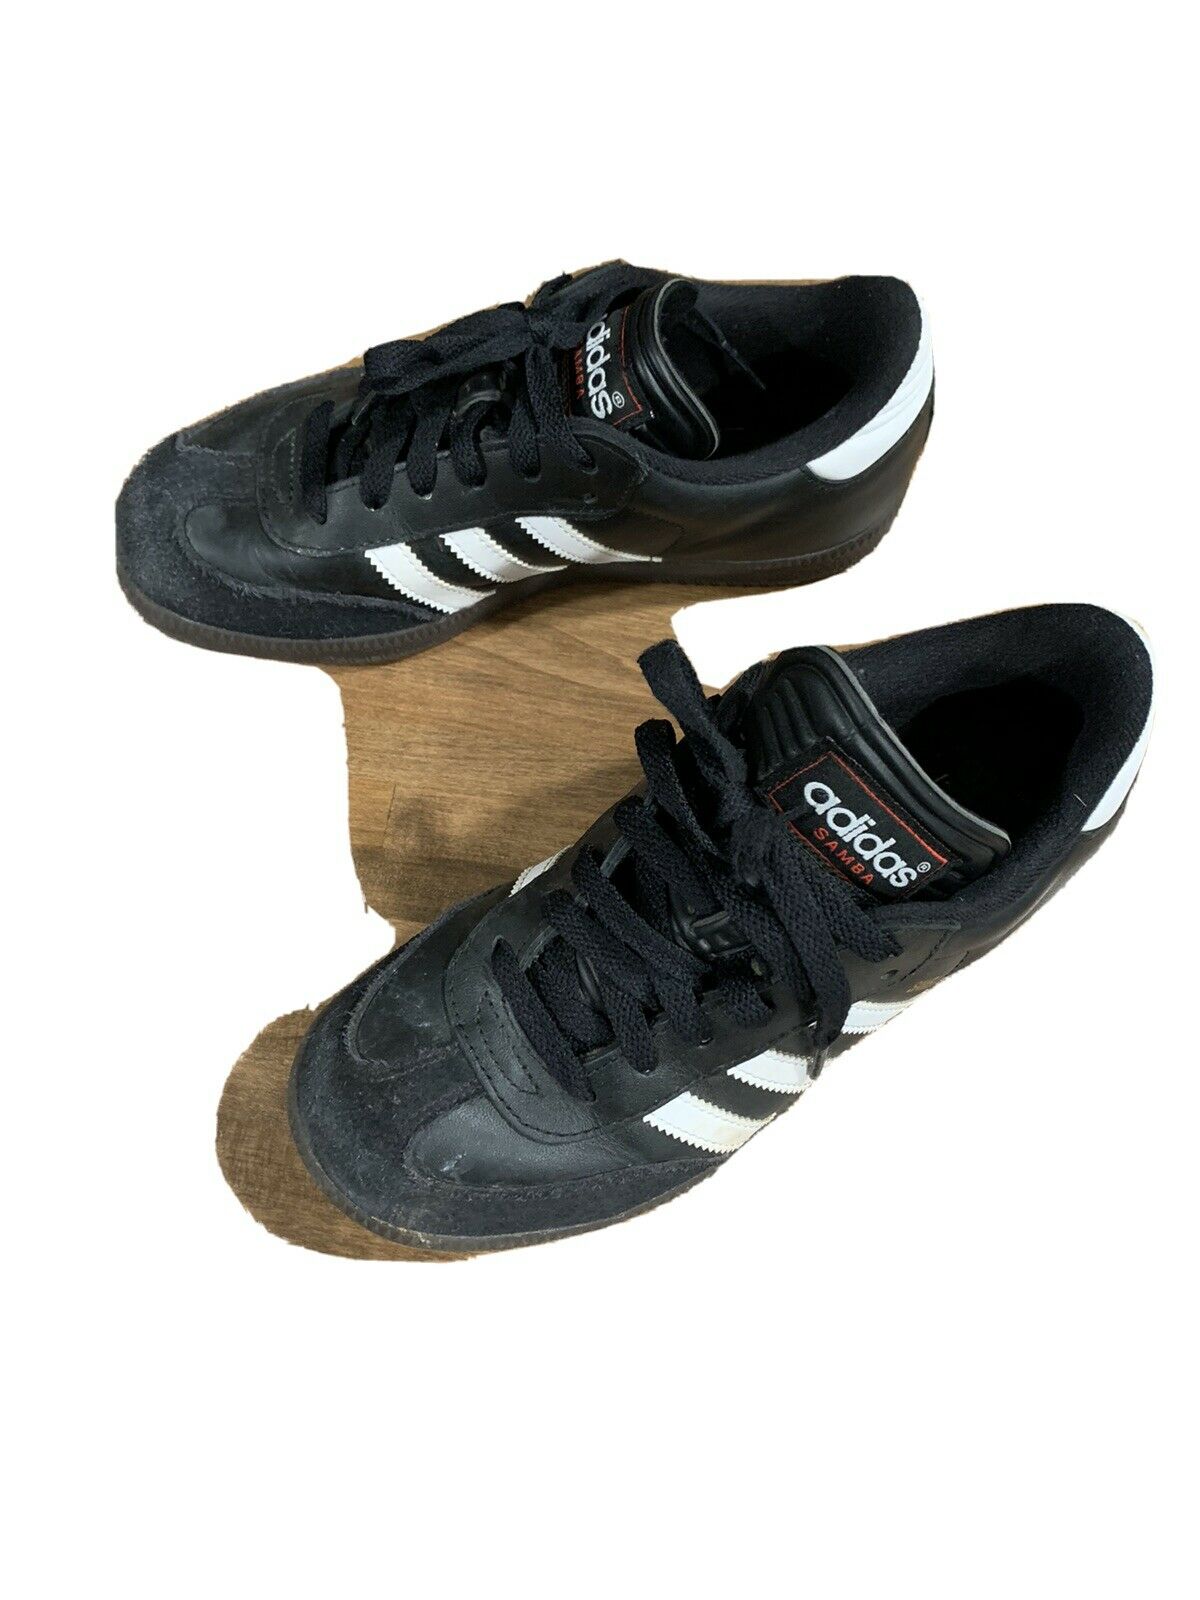 Adidas Samba Shoes Black Size 4 Men's/ Boy's Soccer